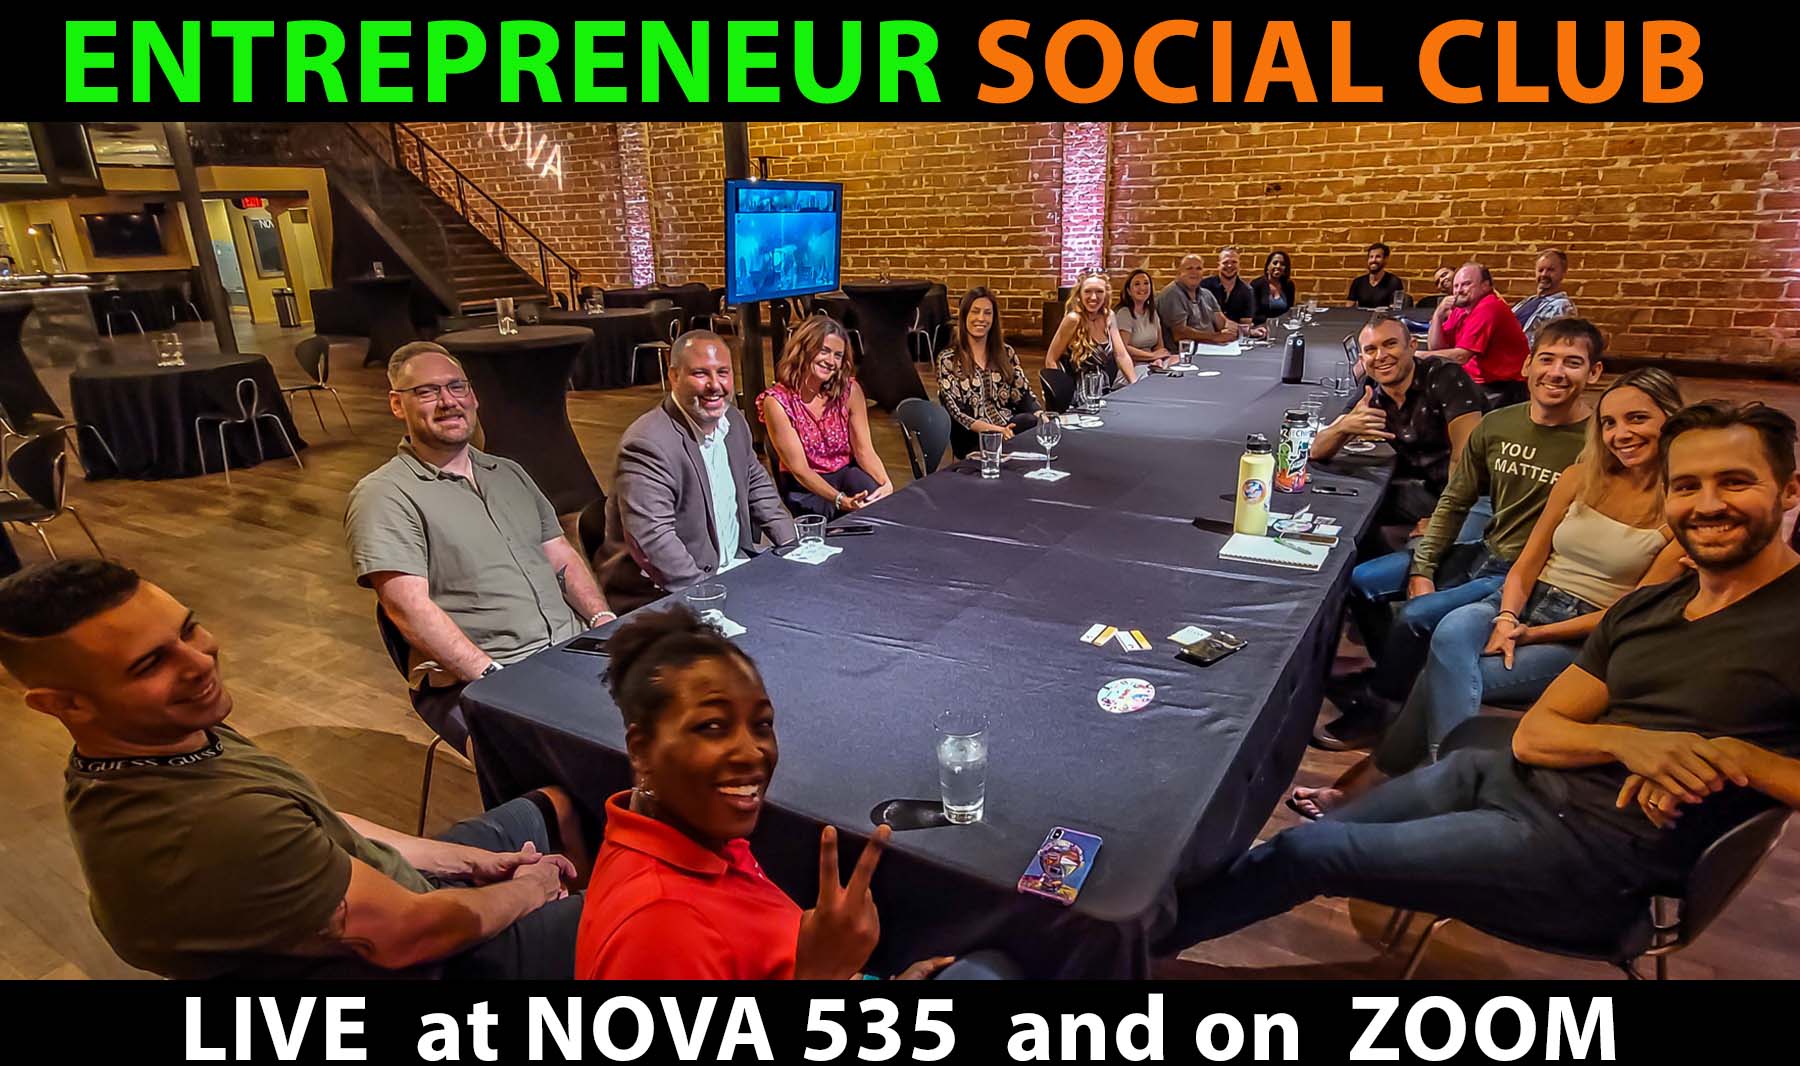 2021 Entrepreneur Social Club at downtown St. Pete venue NOVA 535 and on ZOOM